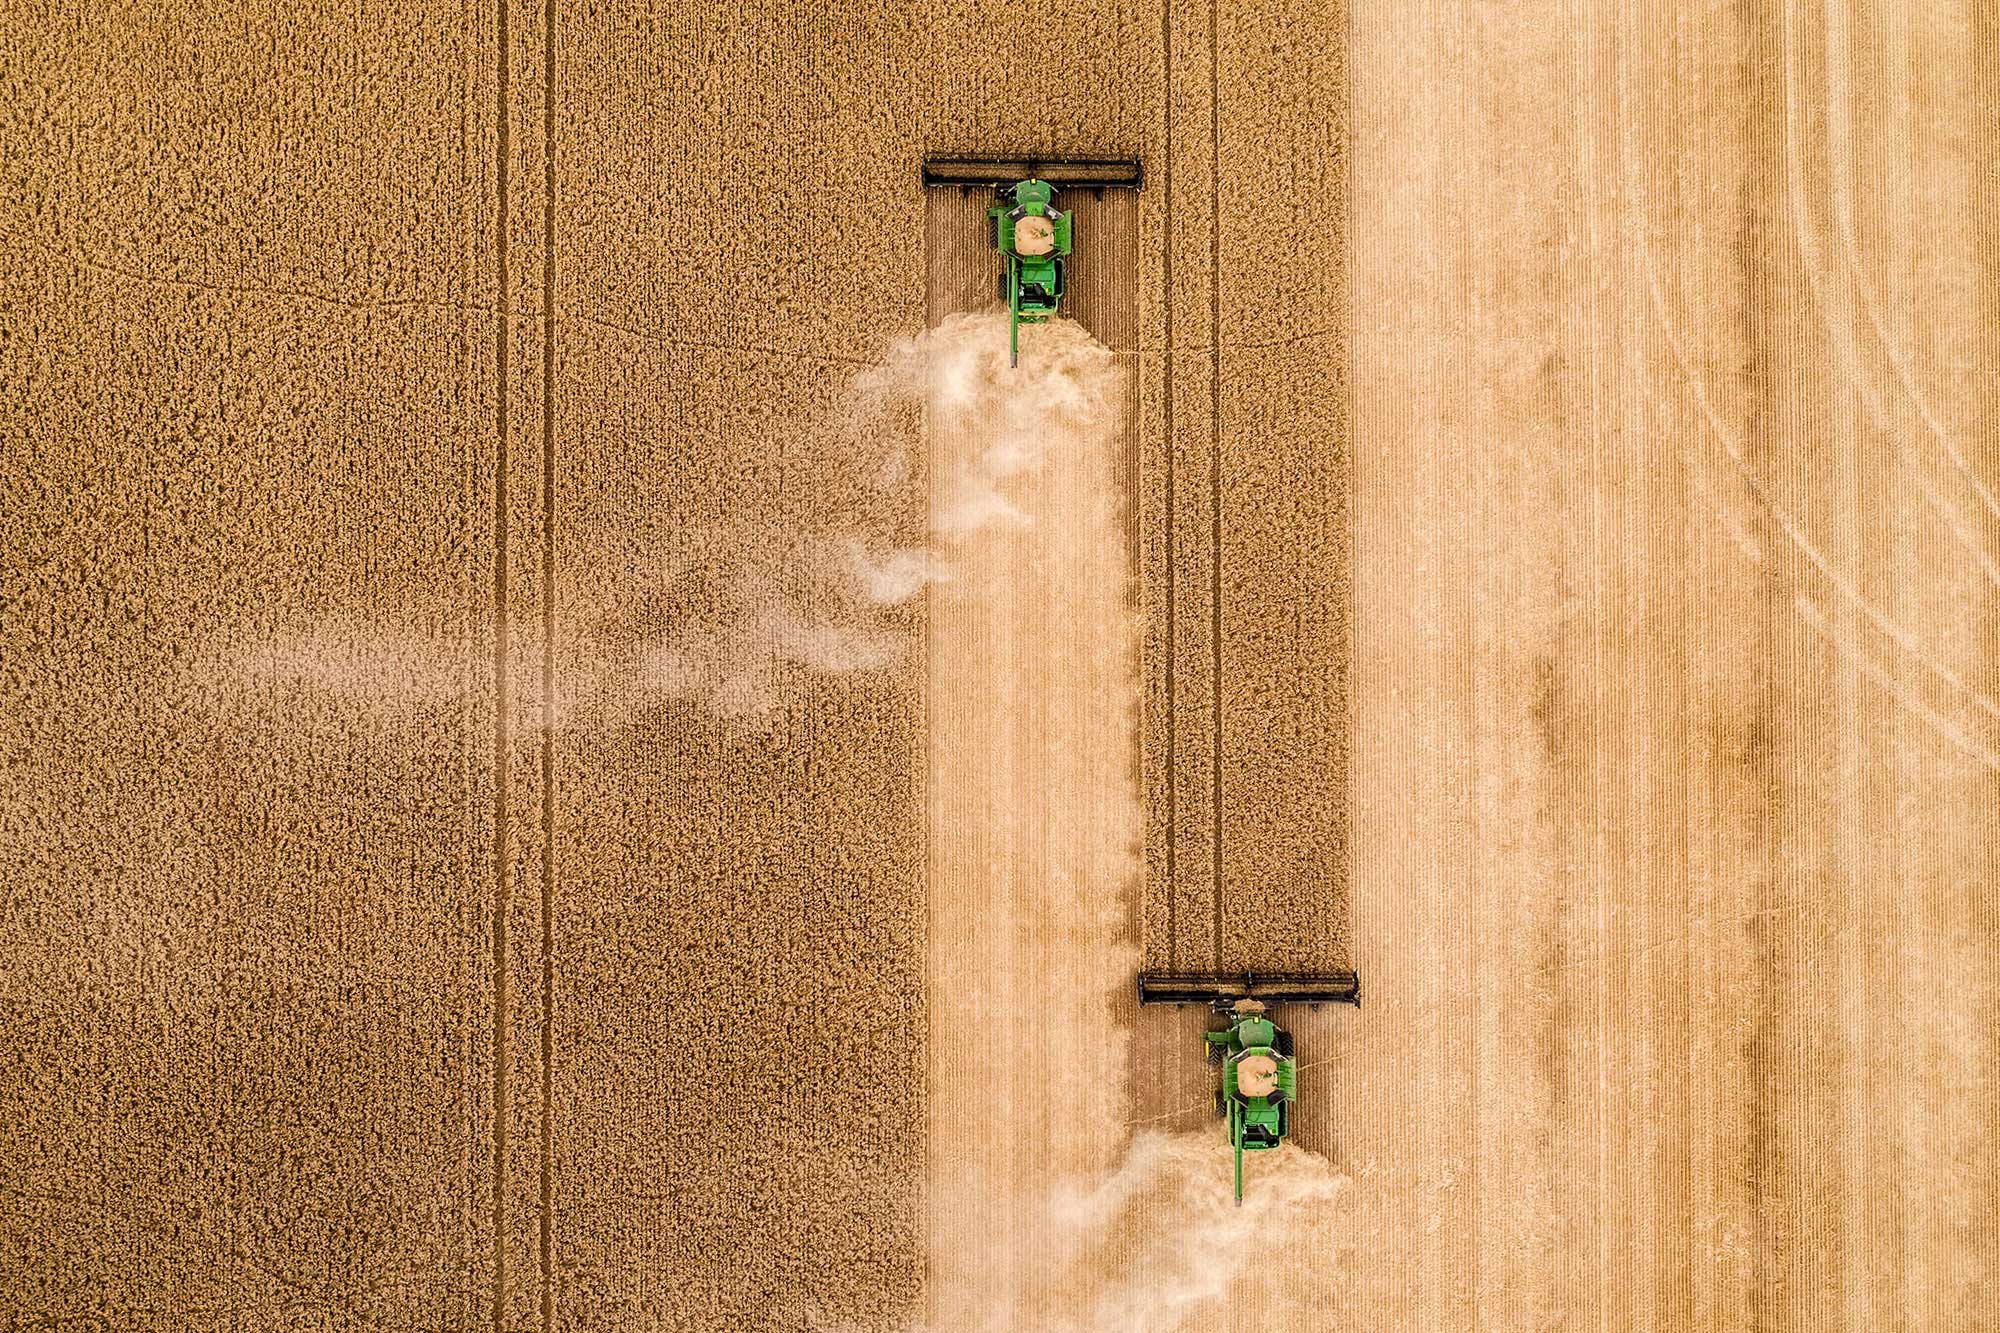 Jeff_Camden_barley_farming_drone_2